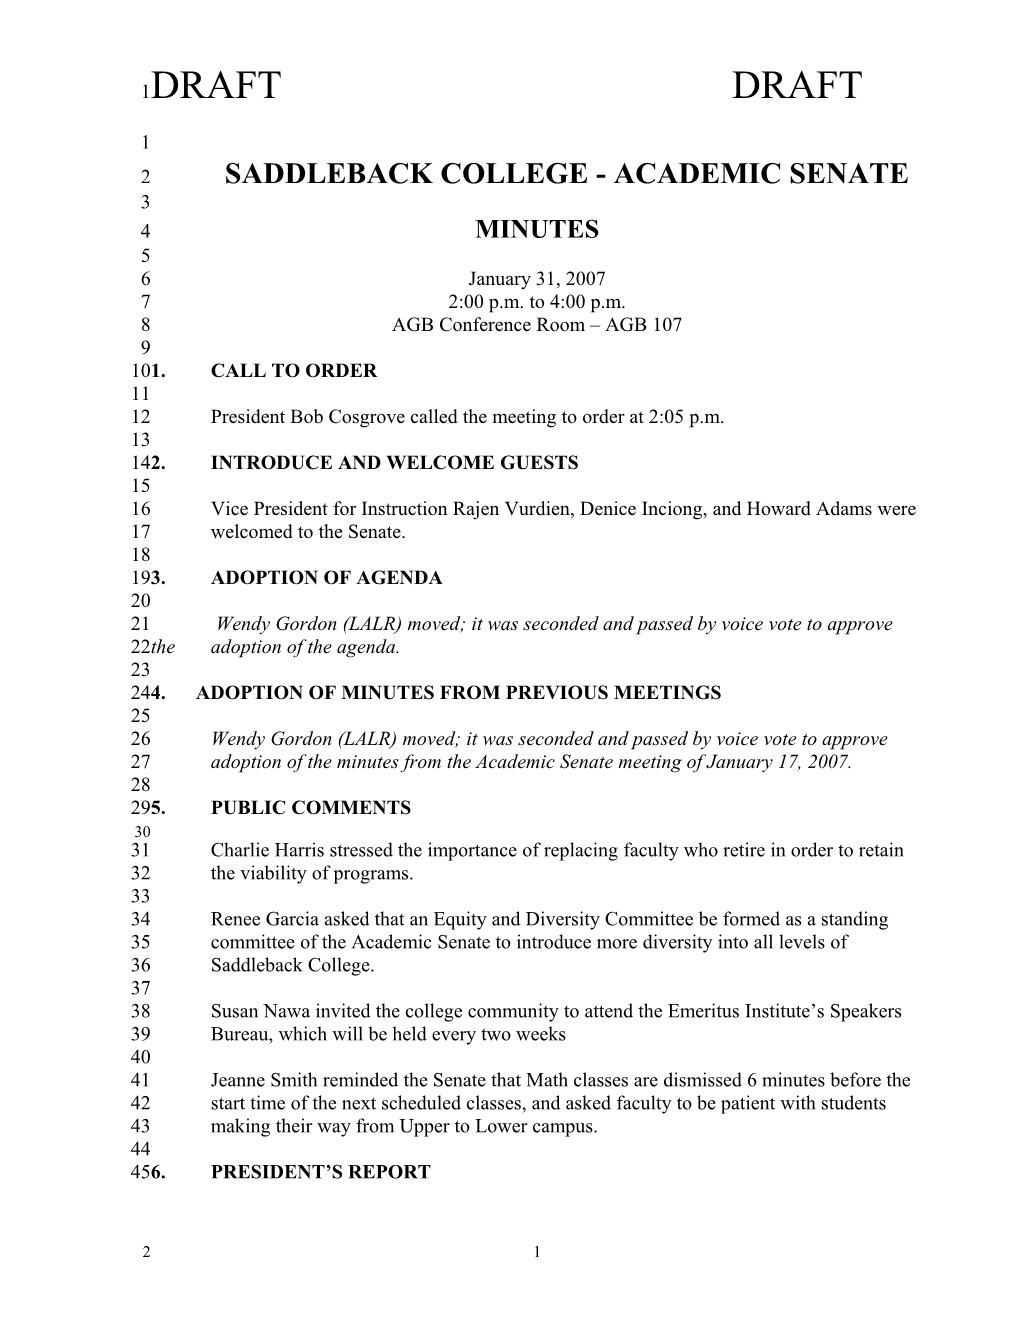 Saddleback College - Academic Senate s3